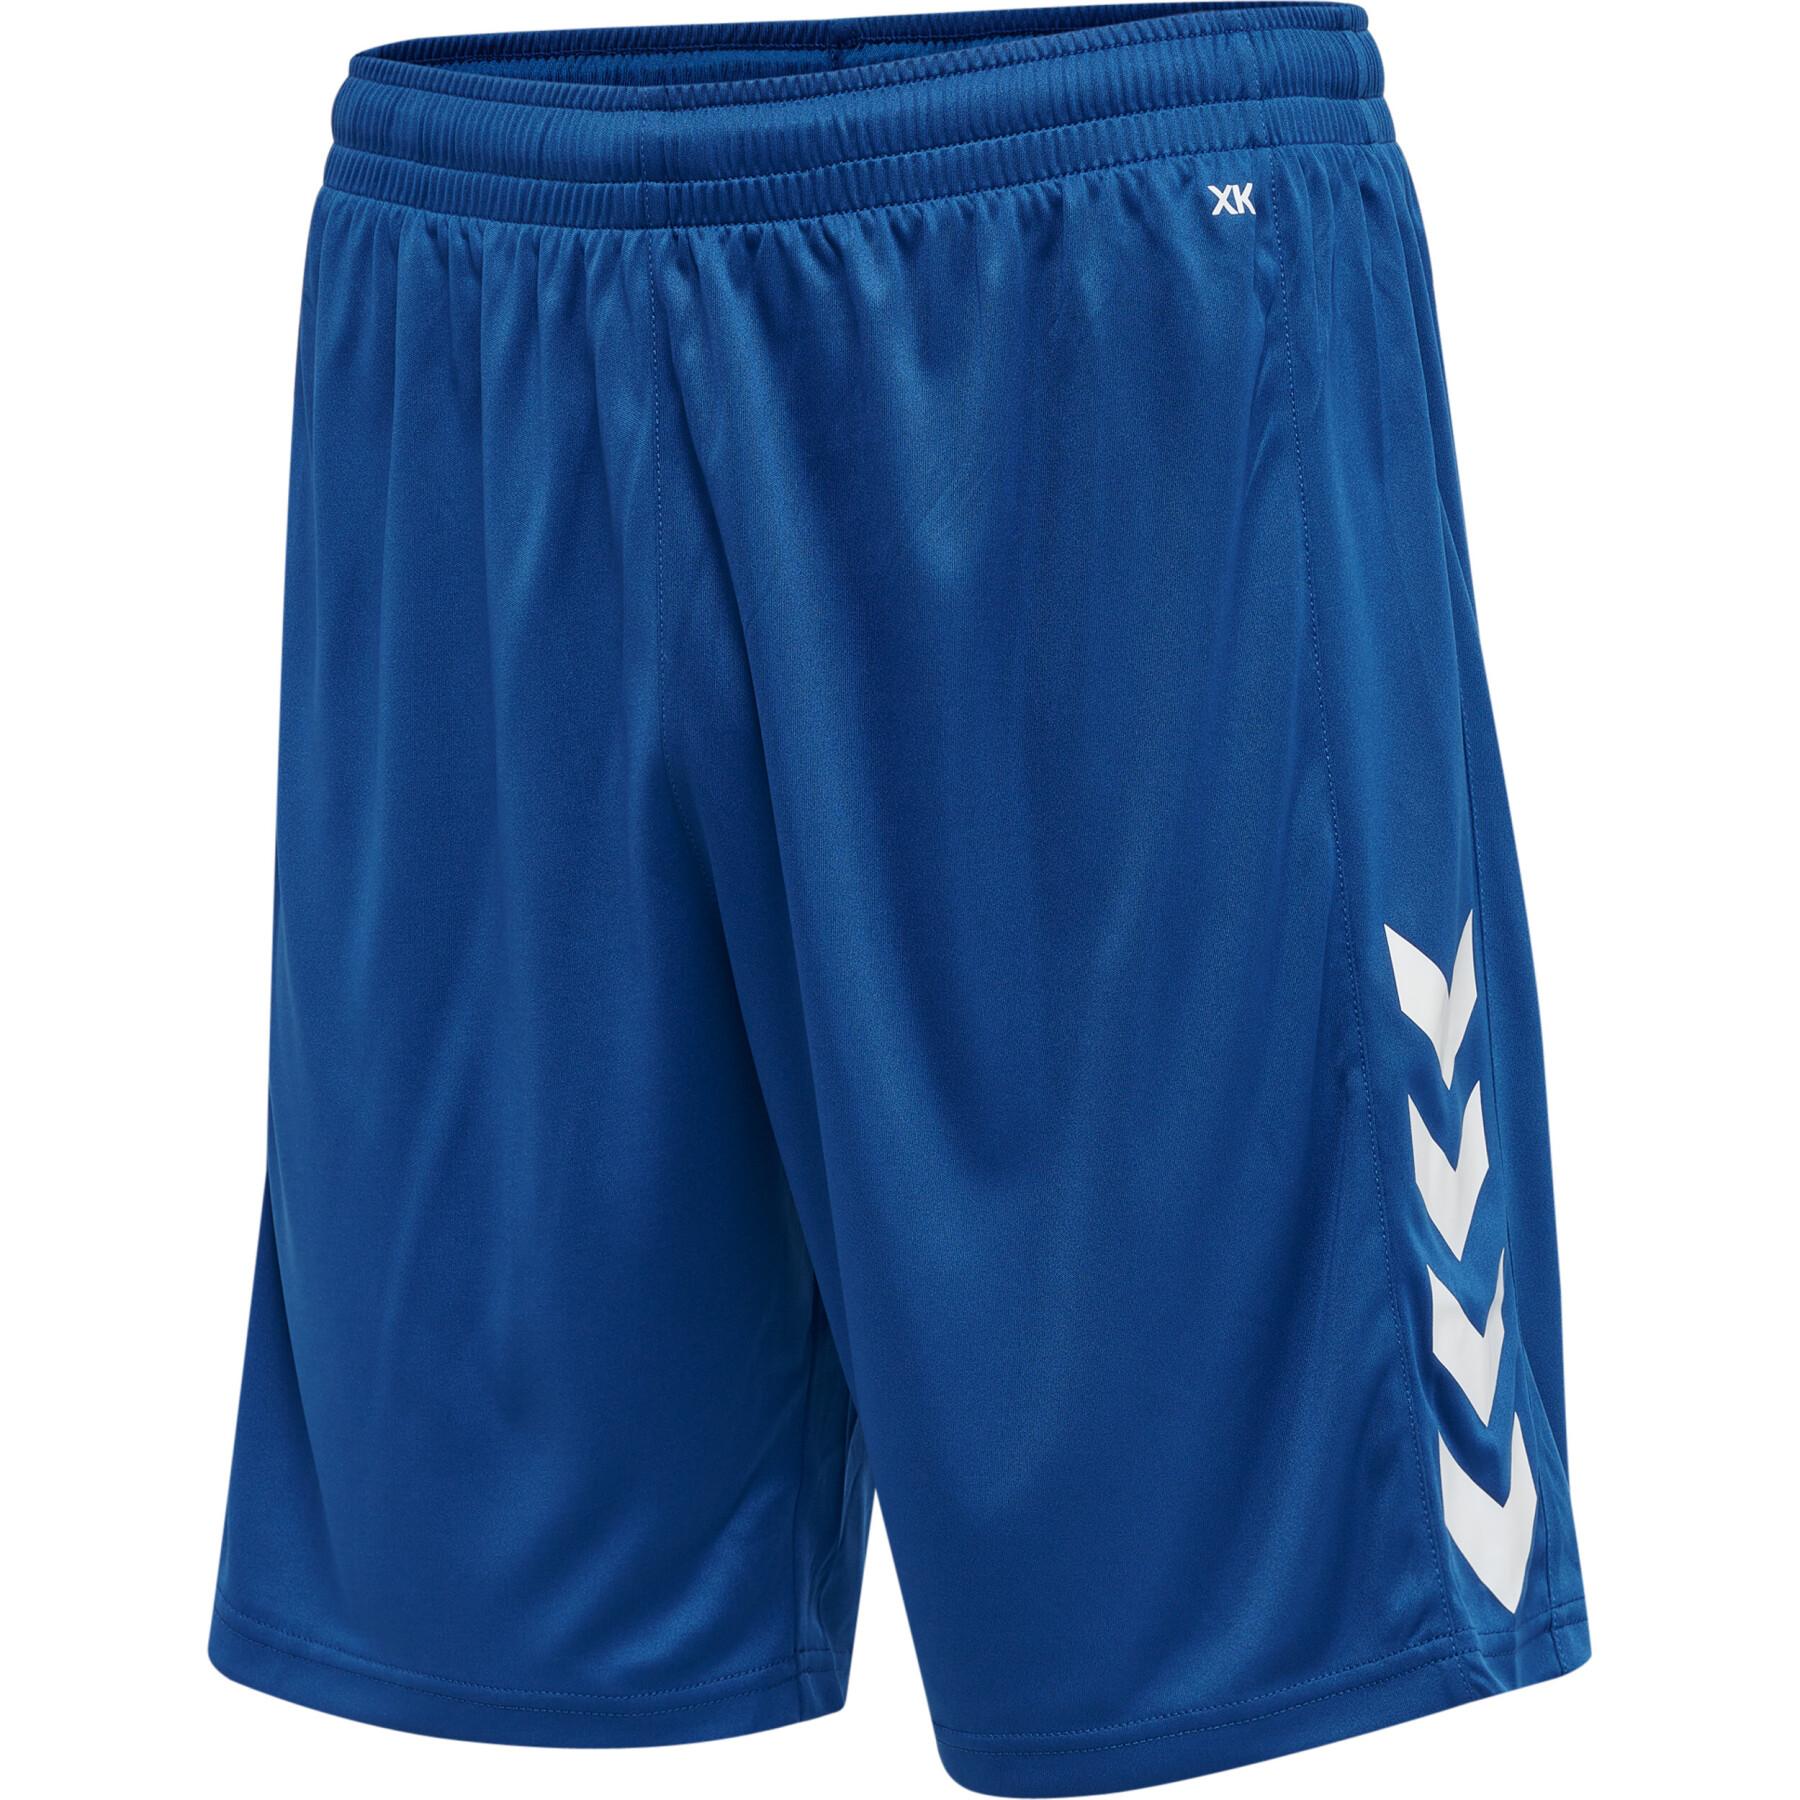 oven Dakloos gemeenschap Polyester shorts Hummel Core XK - Shorts - Textile - Table tennis